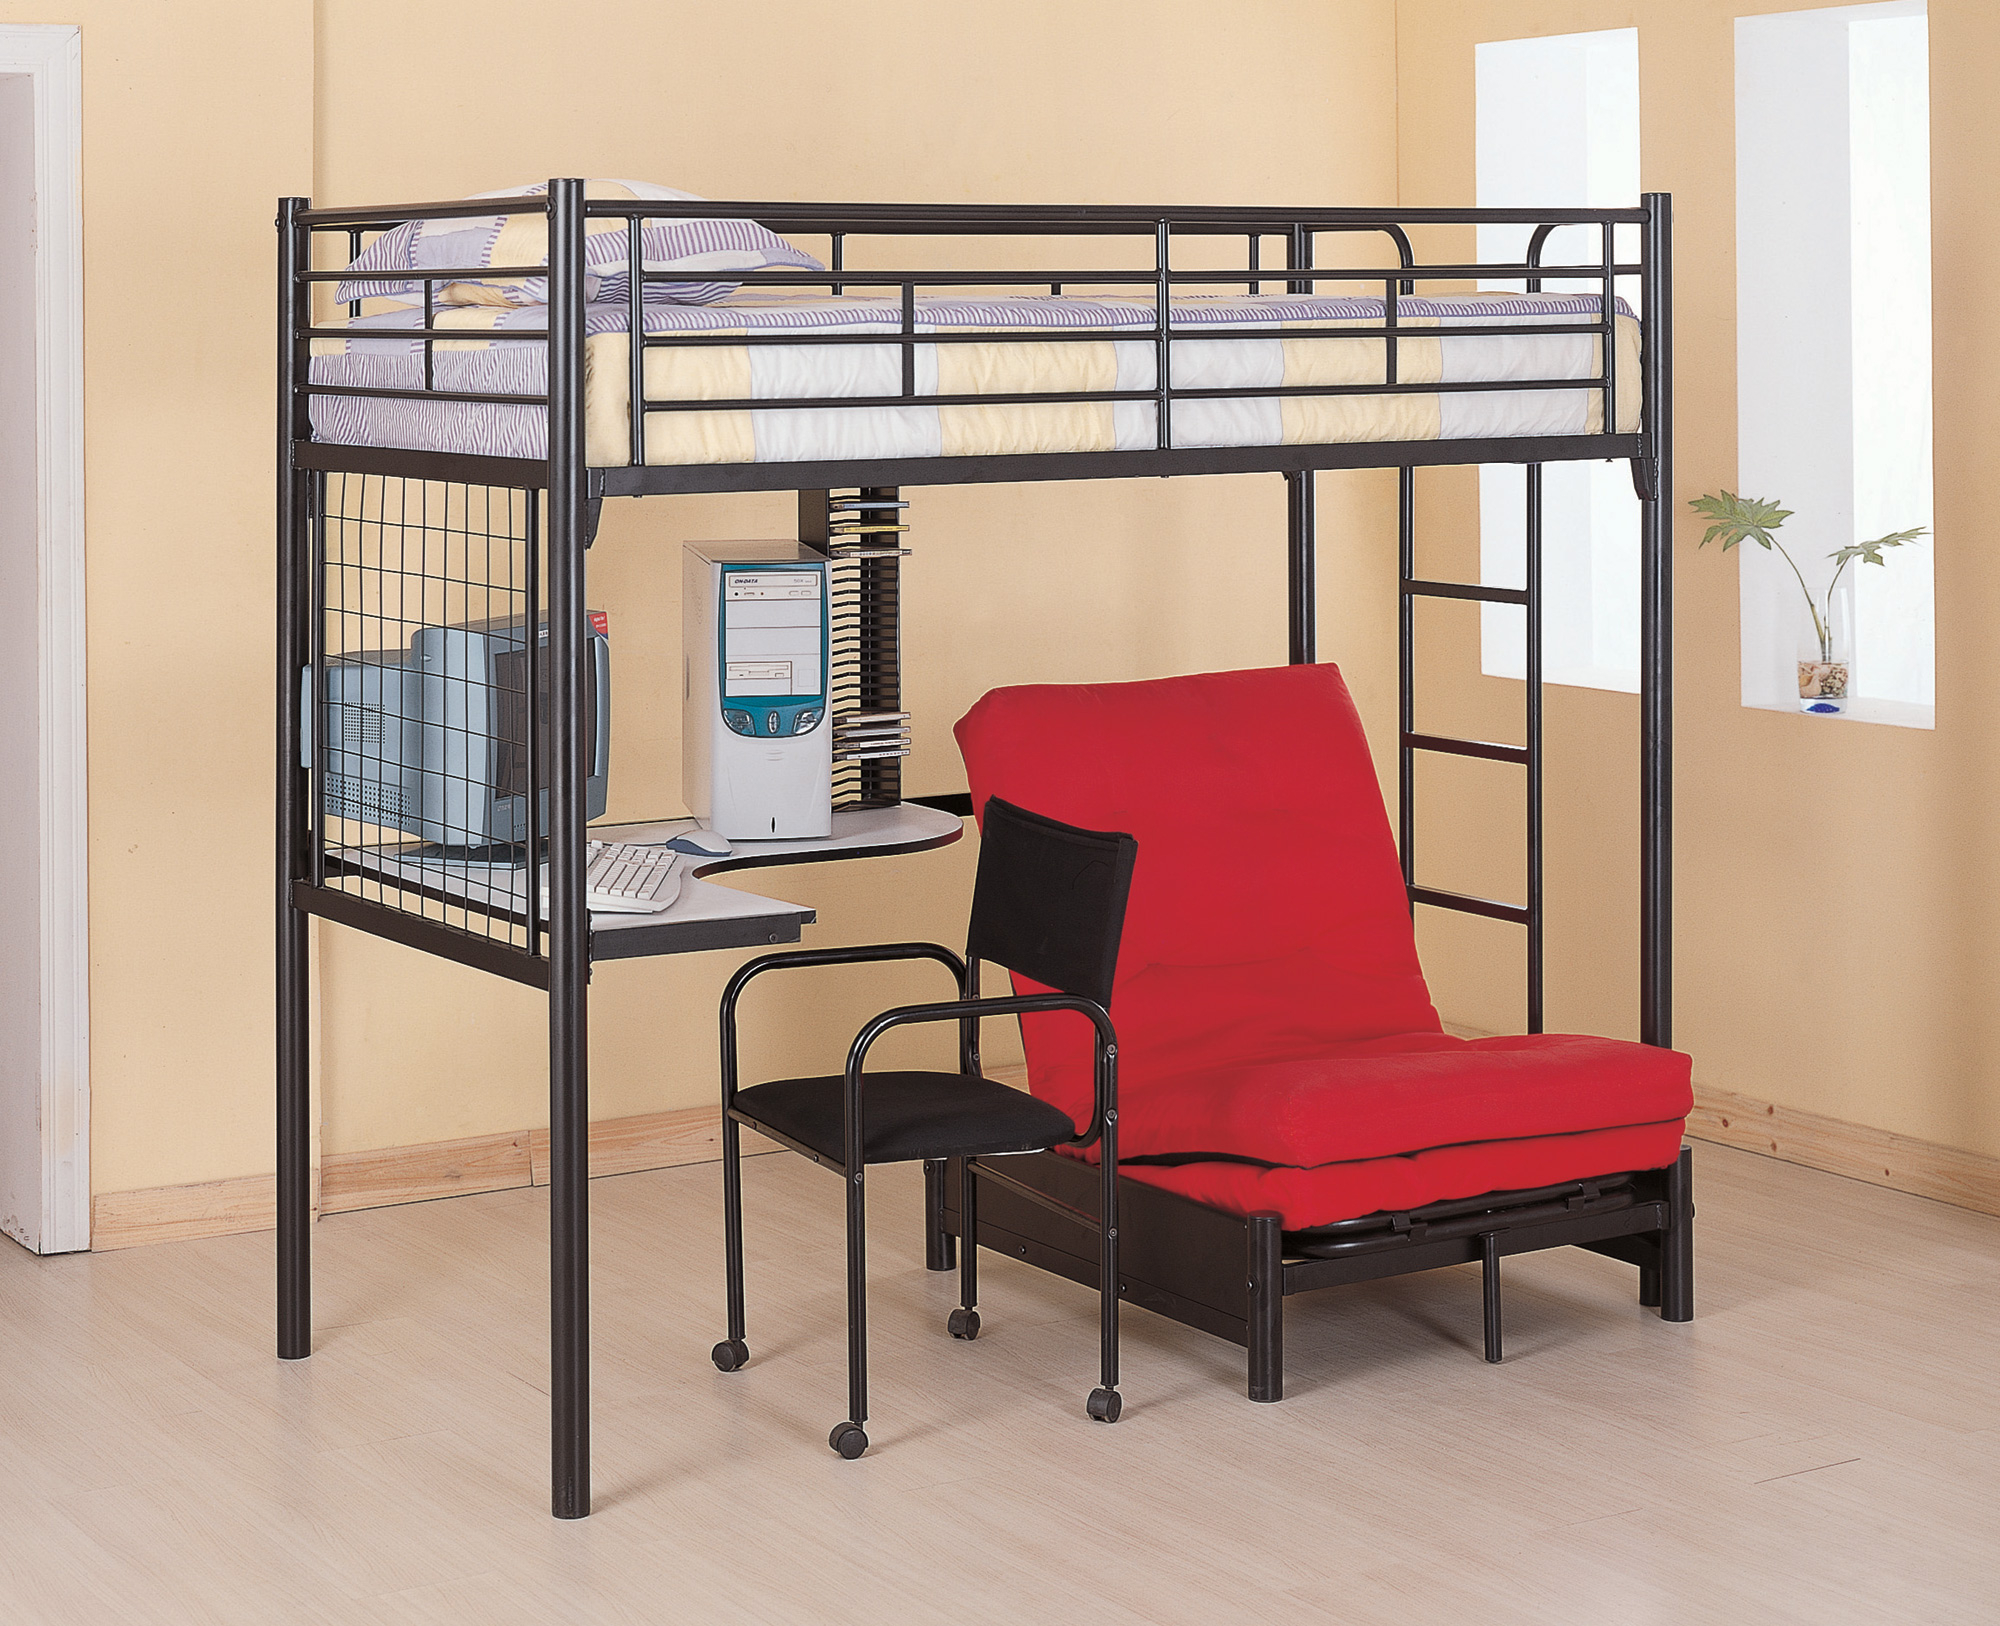 Metal bunk bed with desk